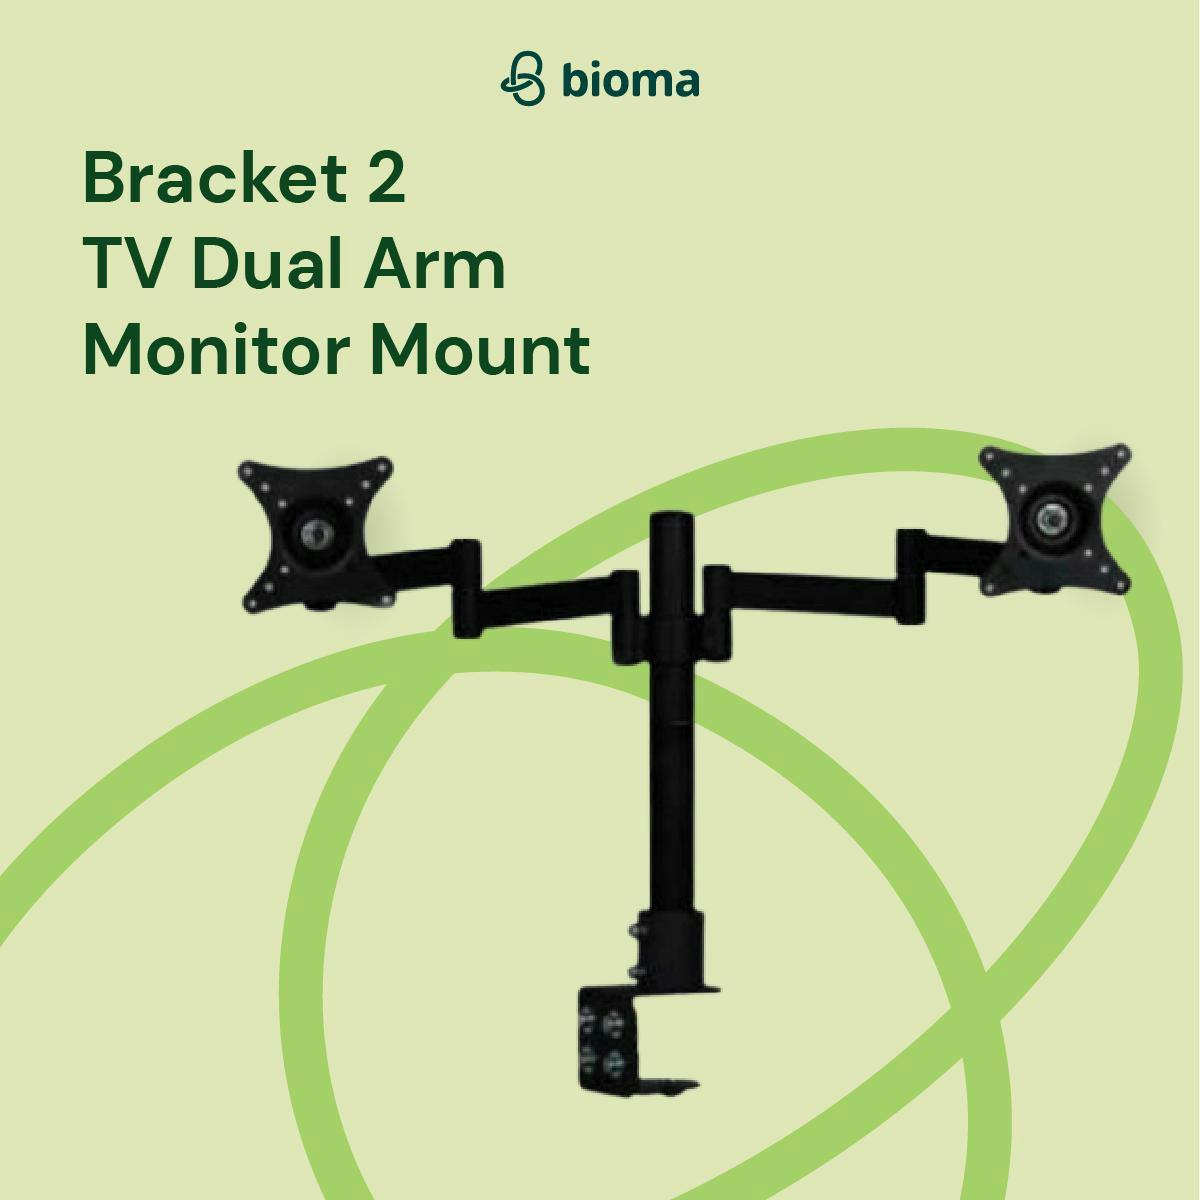 Bracket 2 TV Dual Arm Monitor Mount